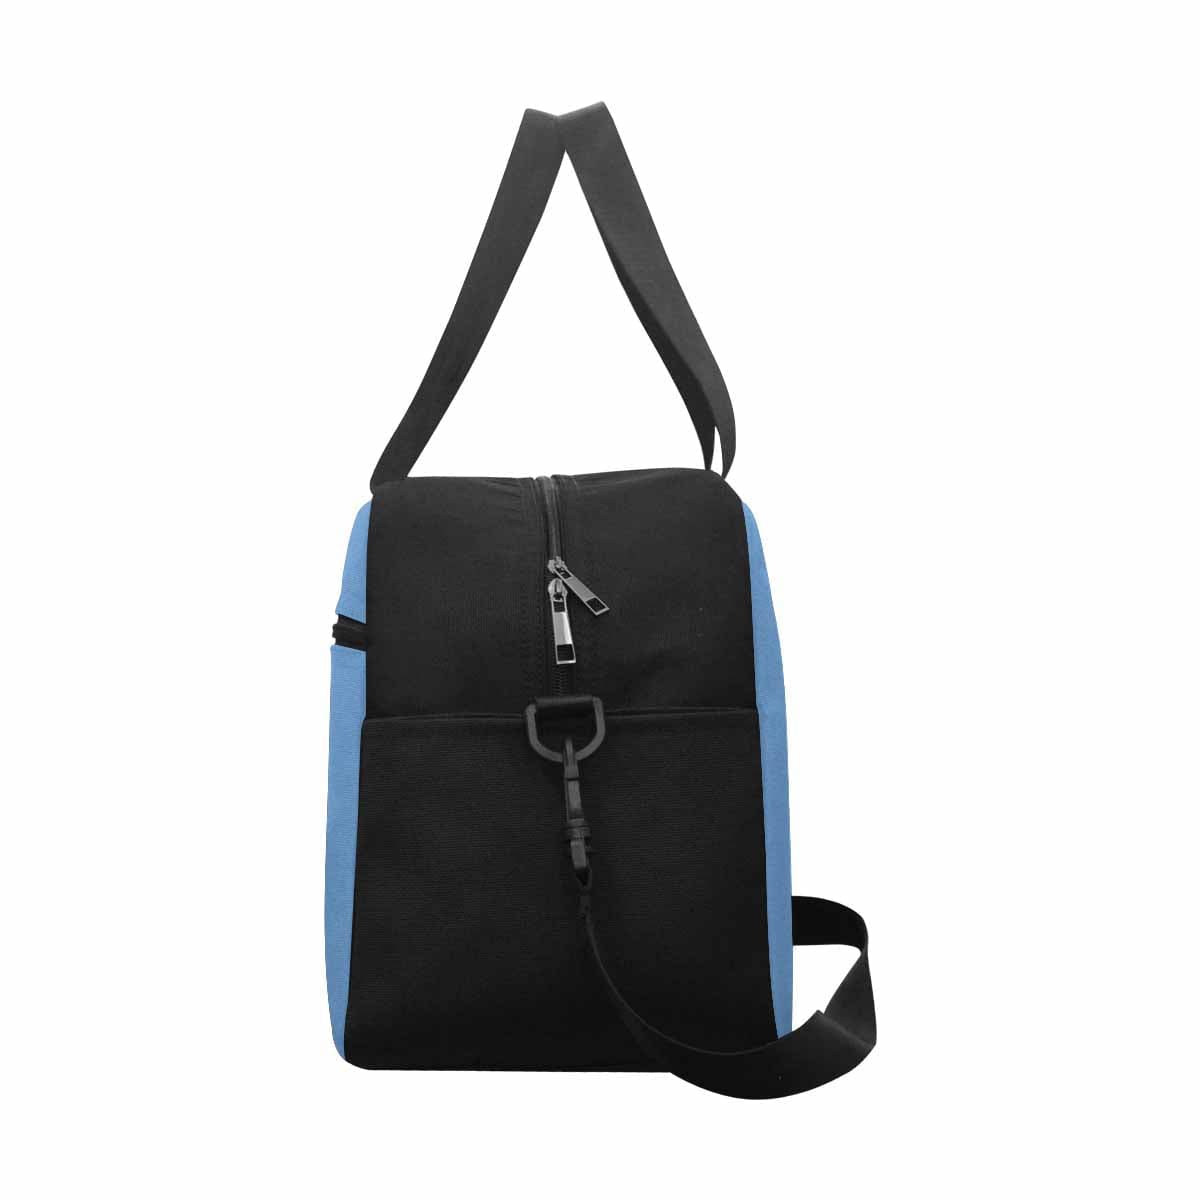 Blue Gray Tote And Crossbody Travel Bag - Bags | Travel Bags | Crossbody